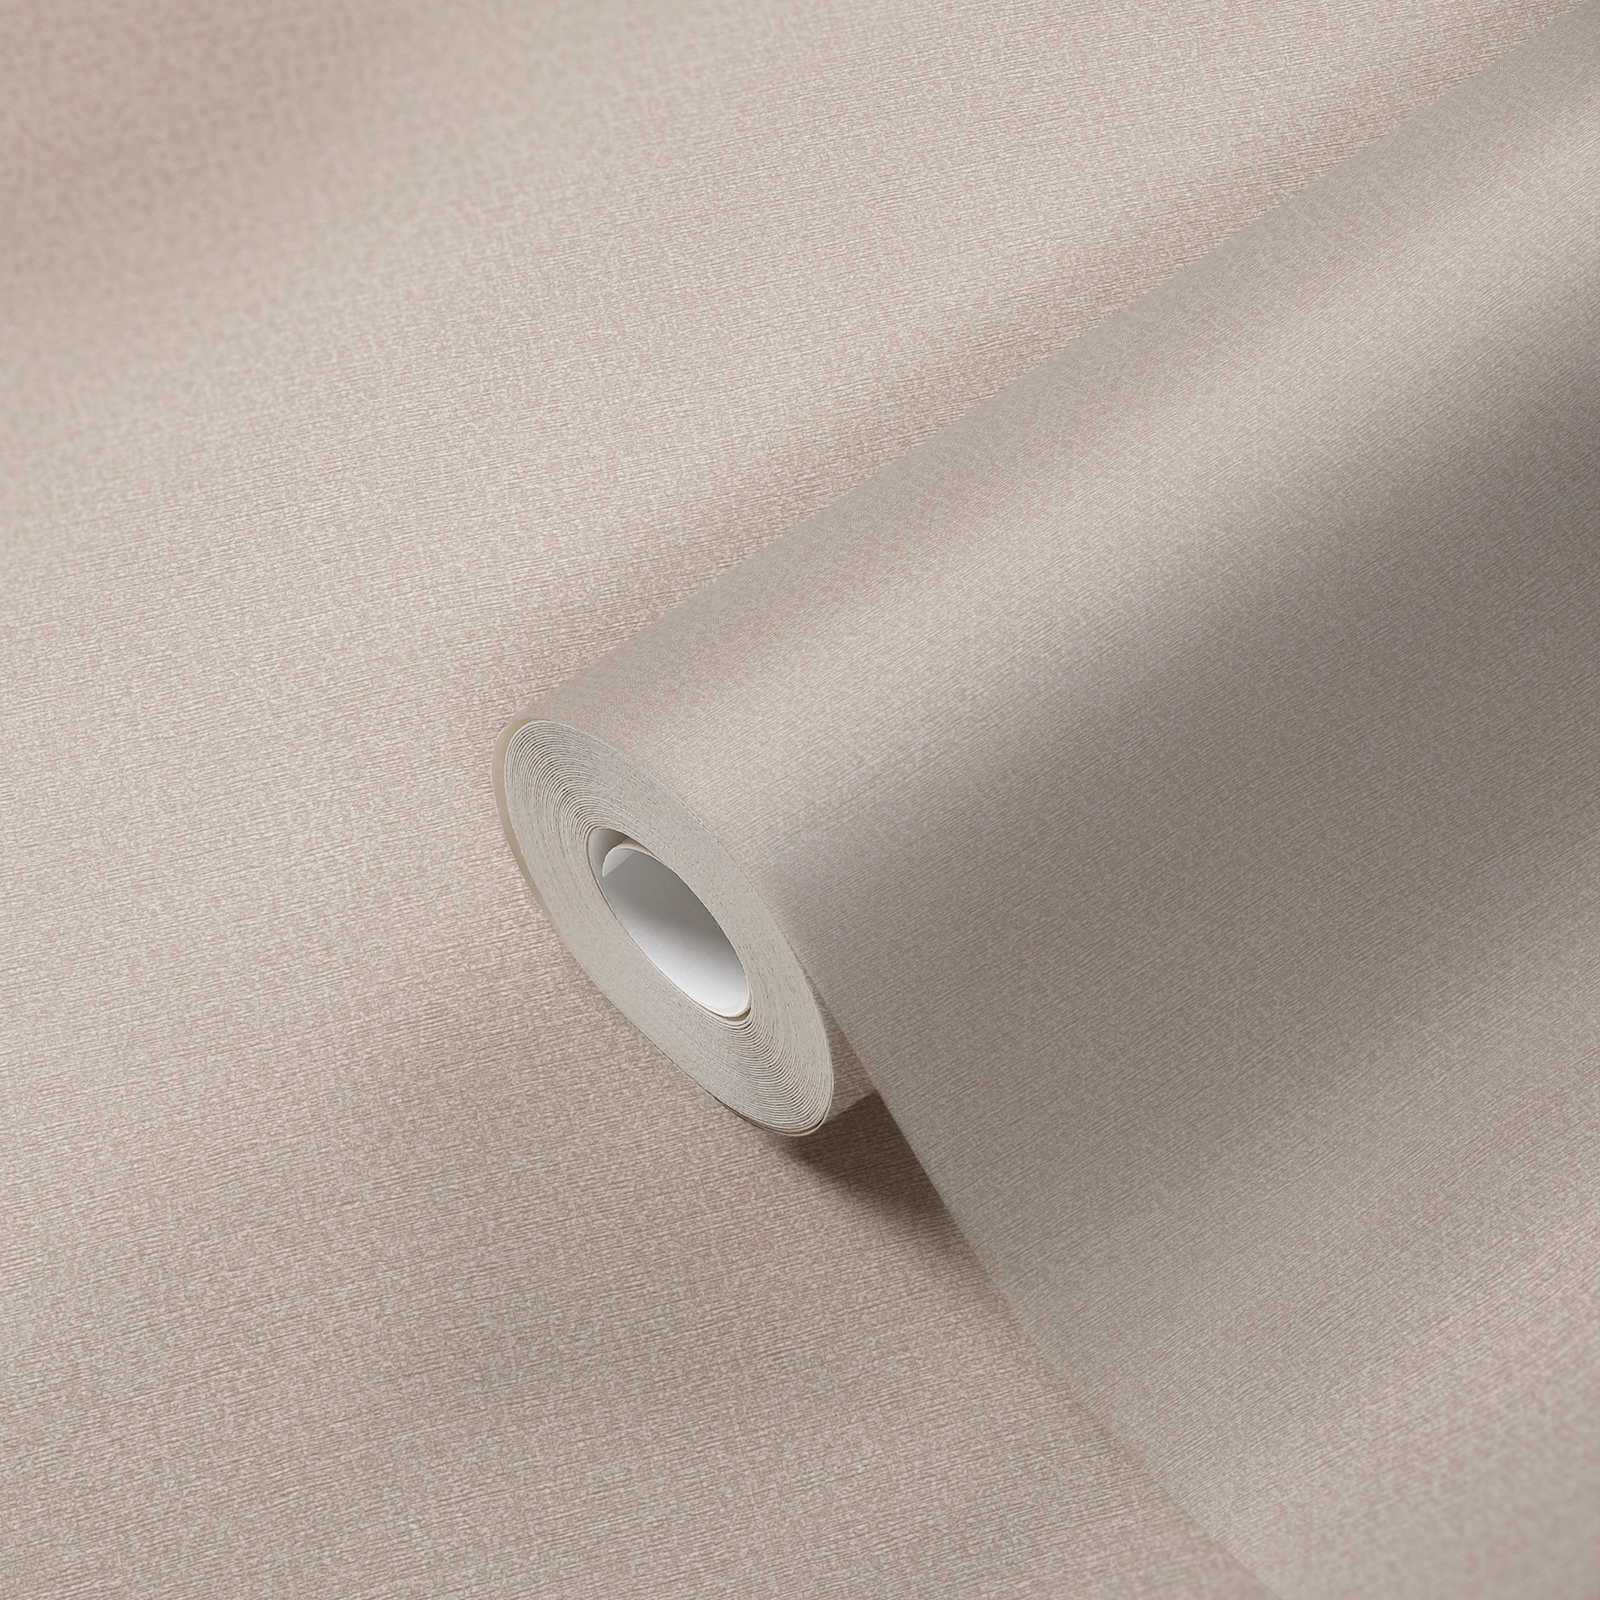             Vliestapete mit Tupfmuster & Glanzeffekt PVC-frei – Beige, Grau
        